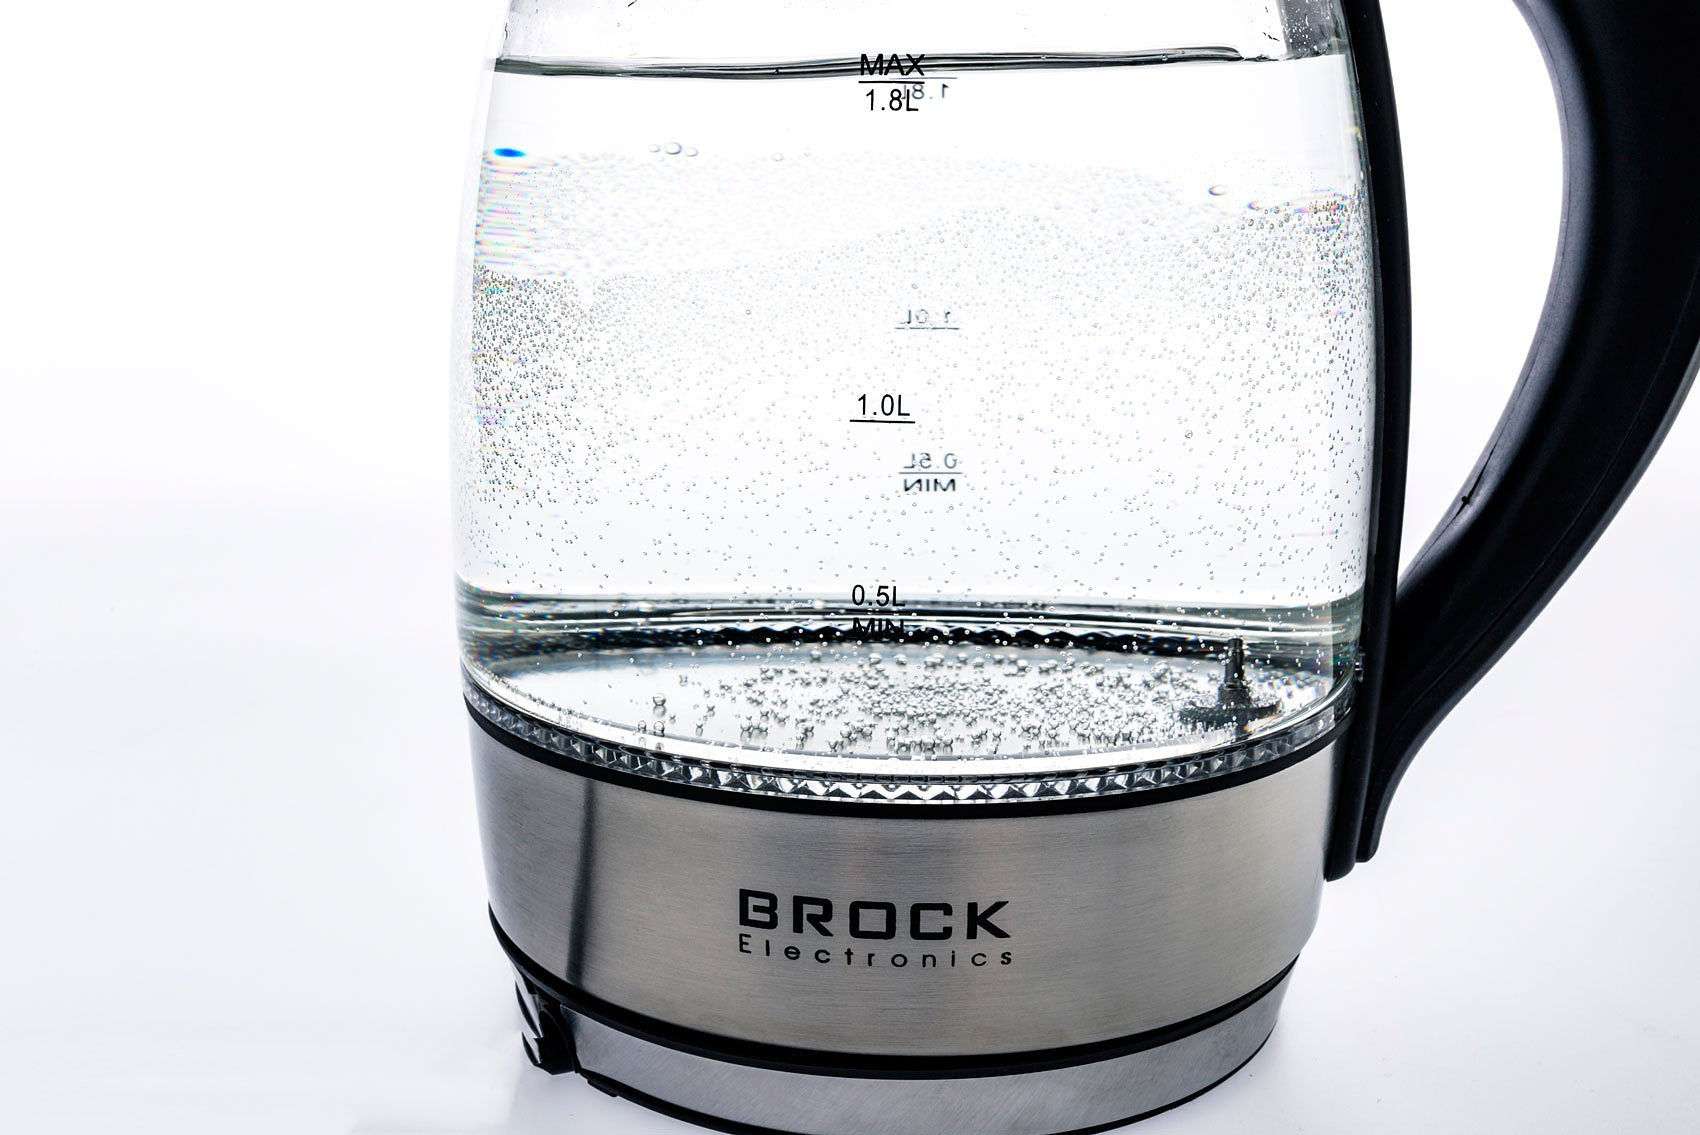 BROCK Electronics Waterkoker Glas WK 2106 LL (1.8 liter, Temperatuurregeling, RVS)